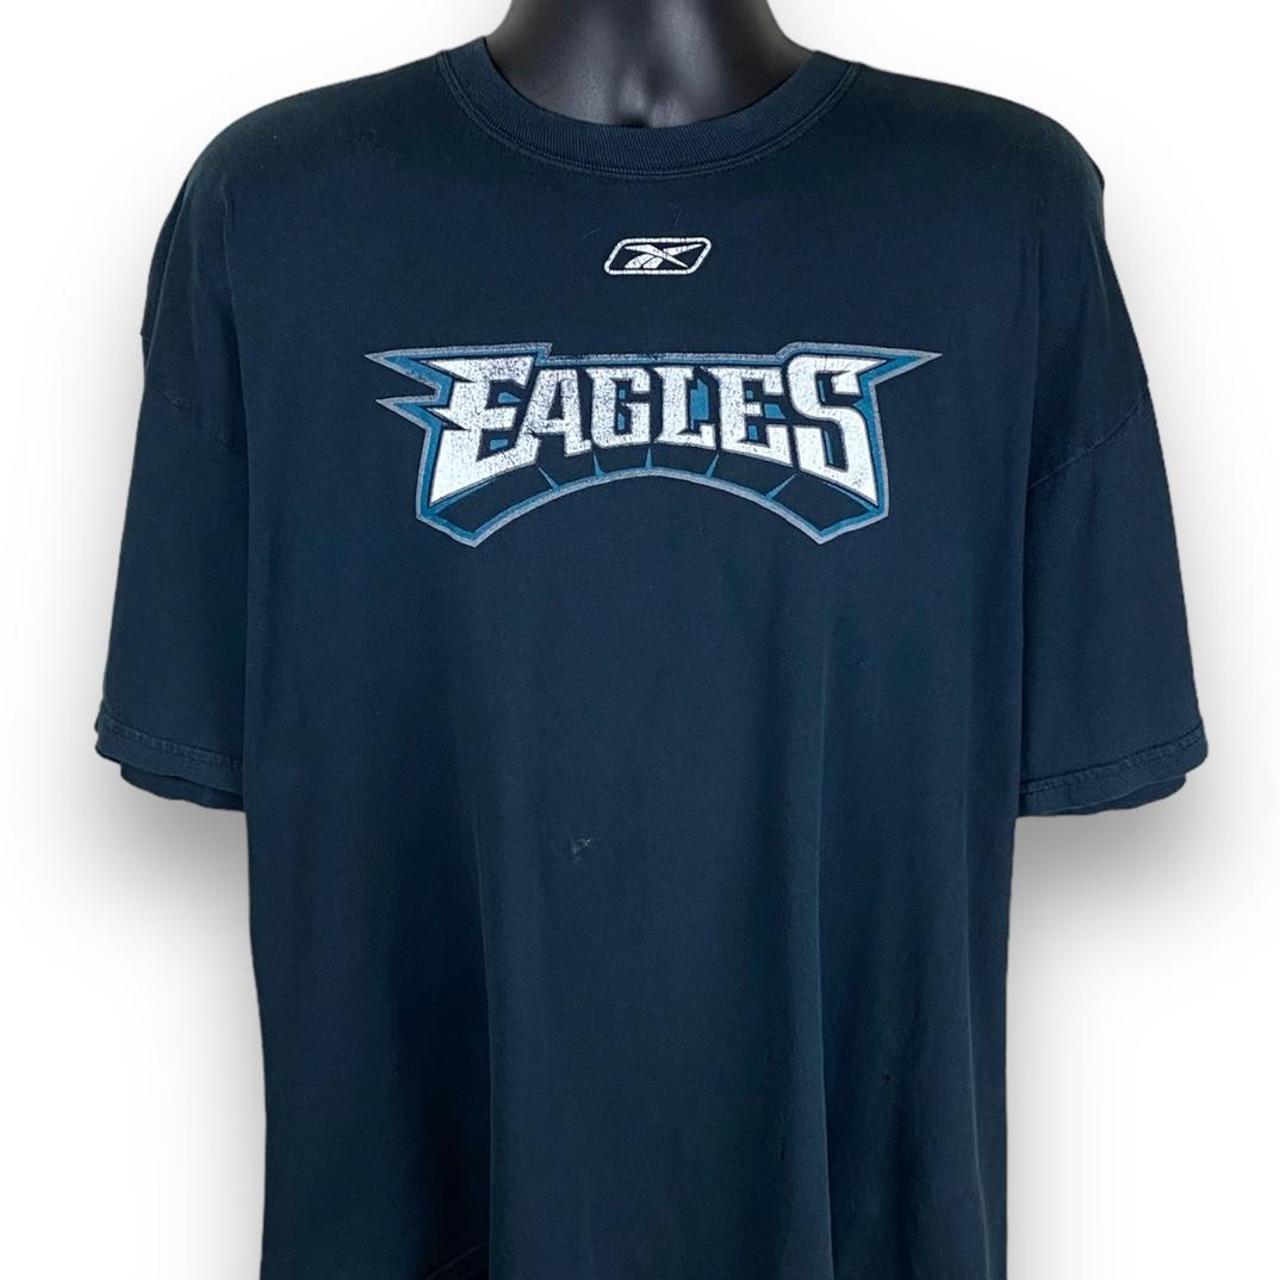 Reebok Philadelphia Eagles Active Jerseys for Men